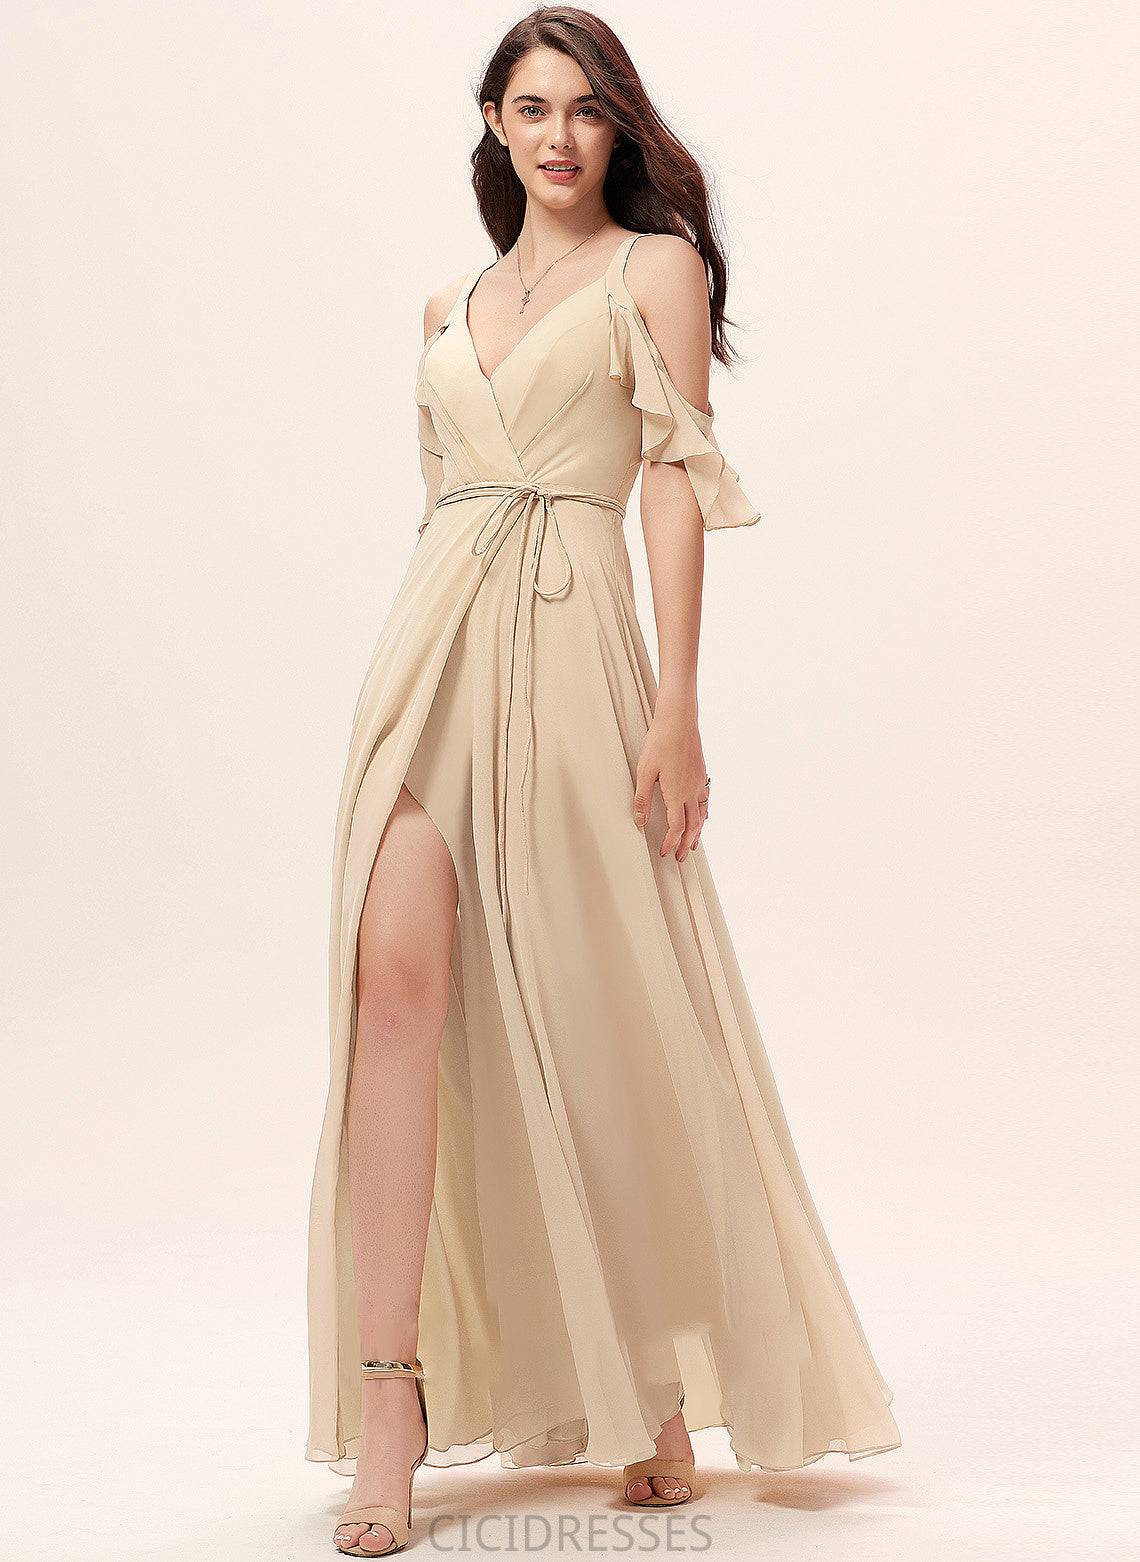 Neckline SplitFront Length Silhouette A-Line Embellishment Ruffle Floor-Length V-neck Fabric Gwendolyn Natural Waist Bridesmaid Dresses